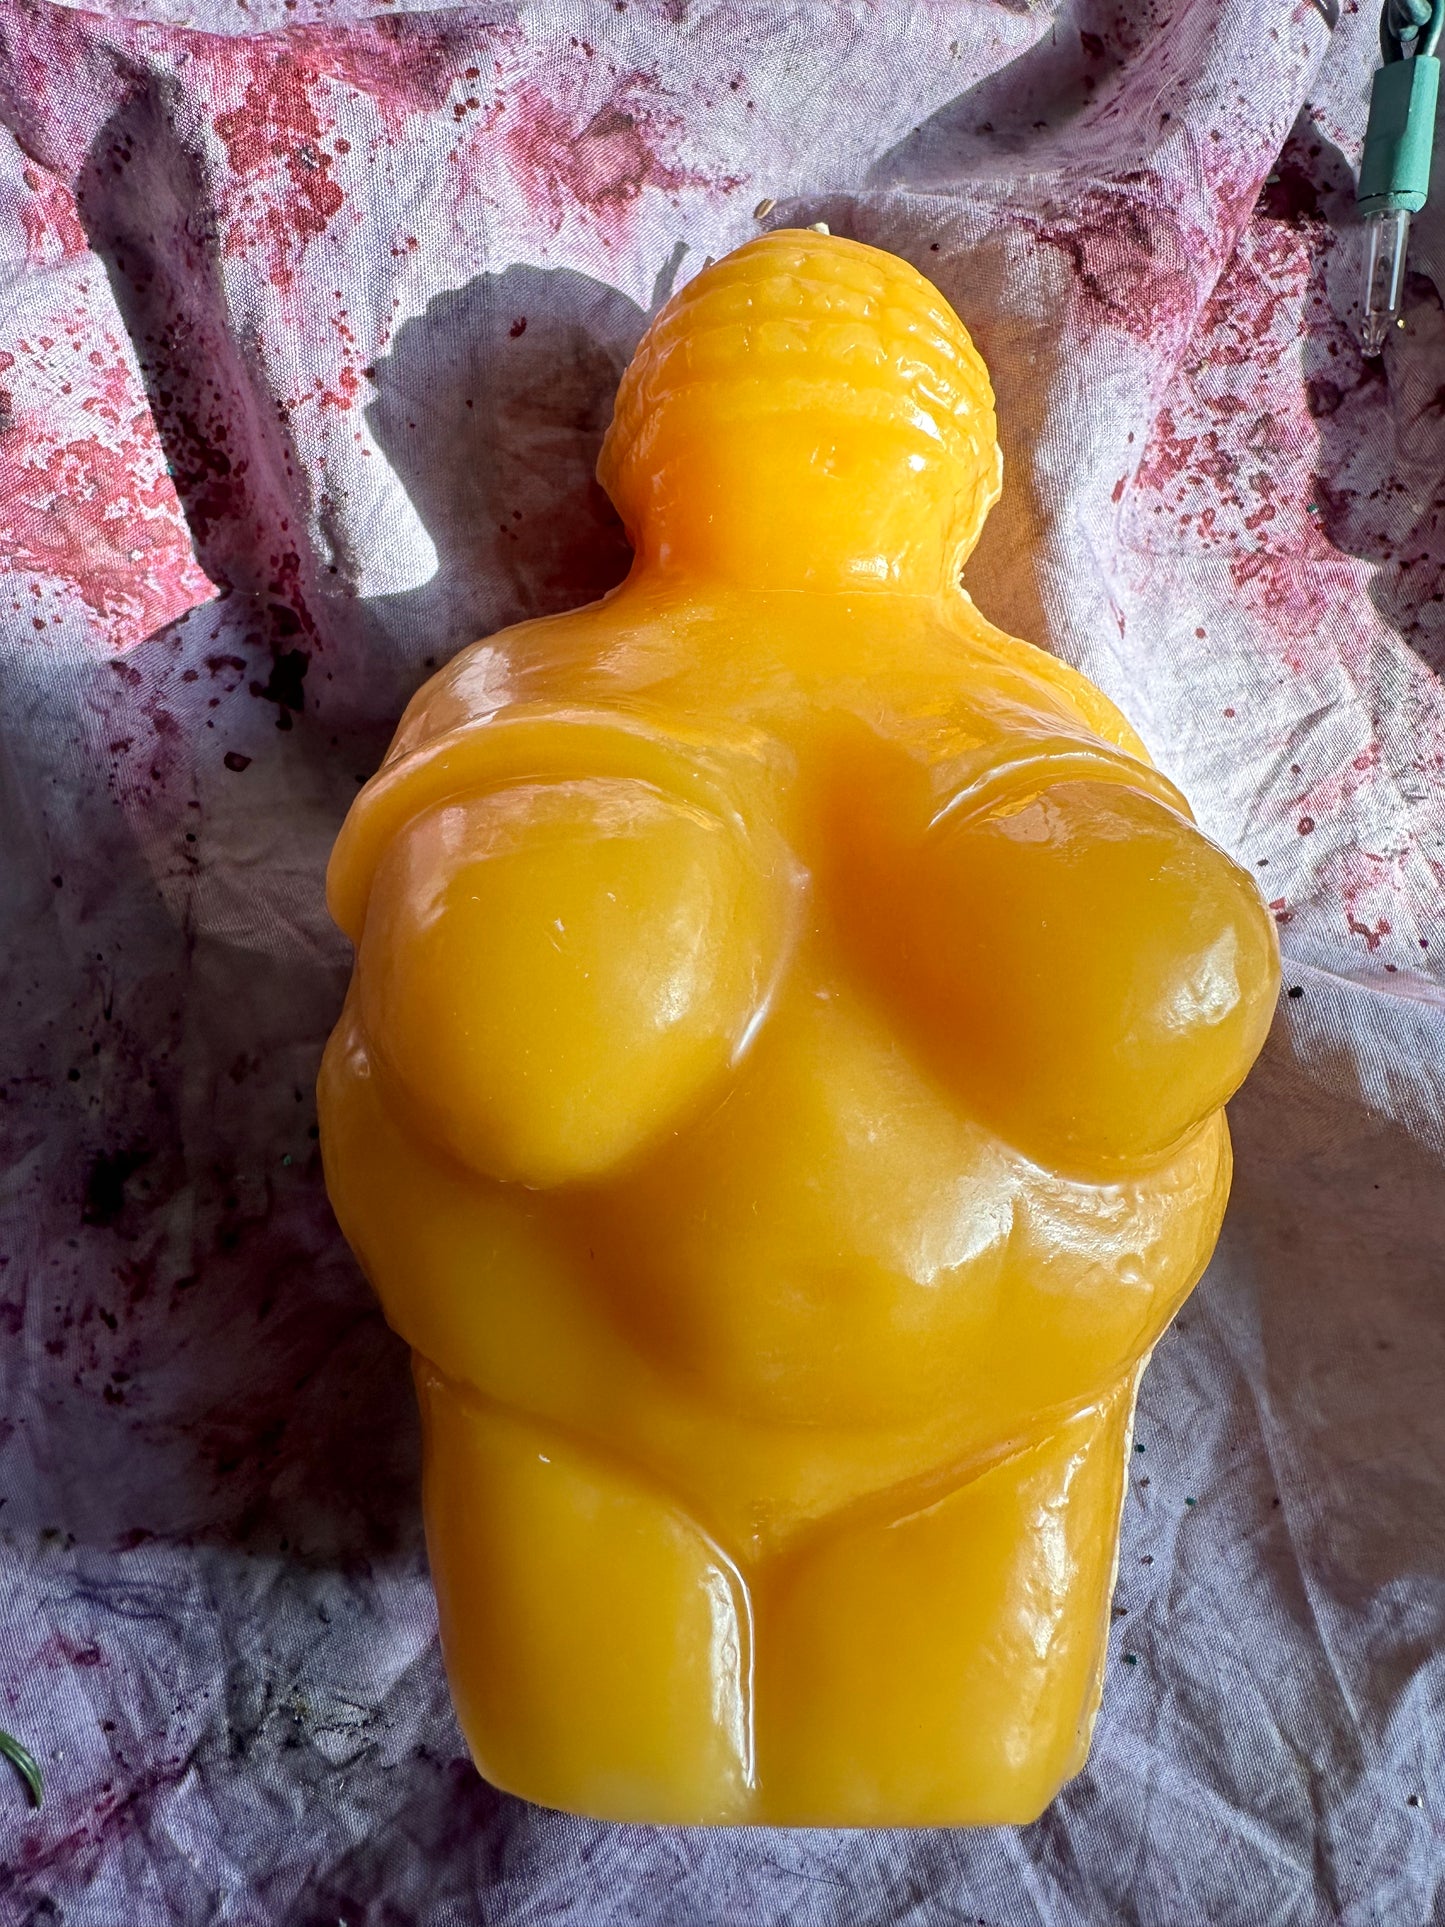 Fertility goddess altar candle